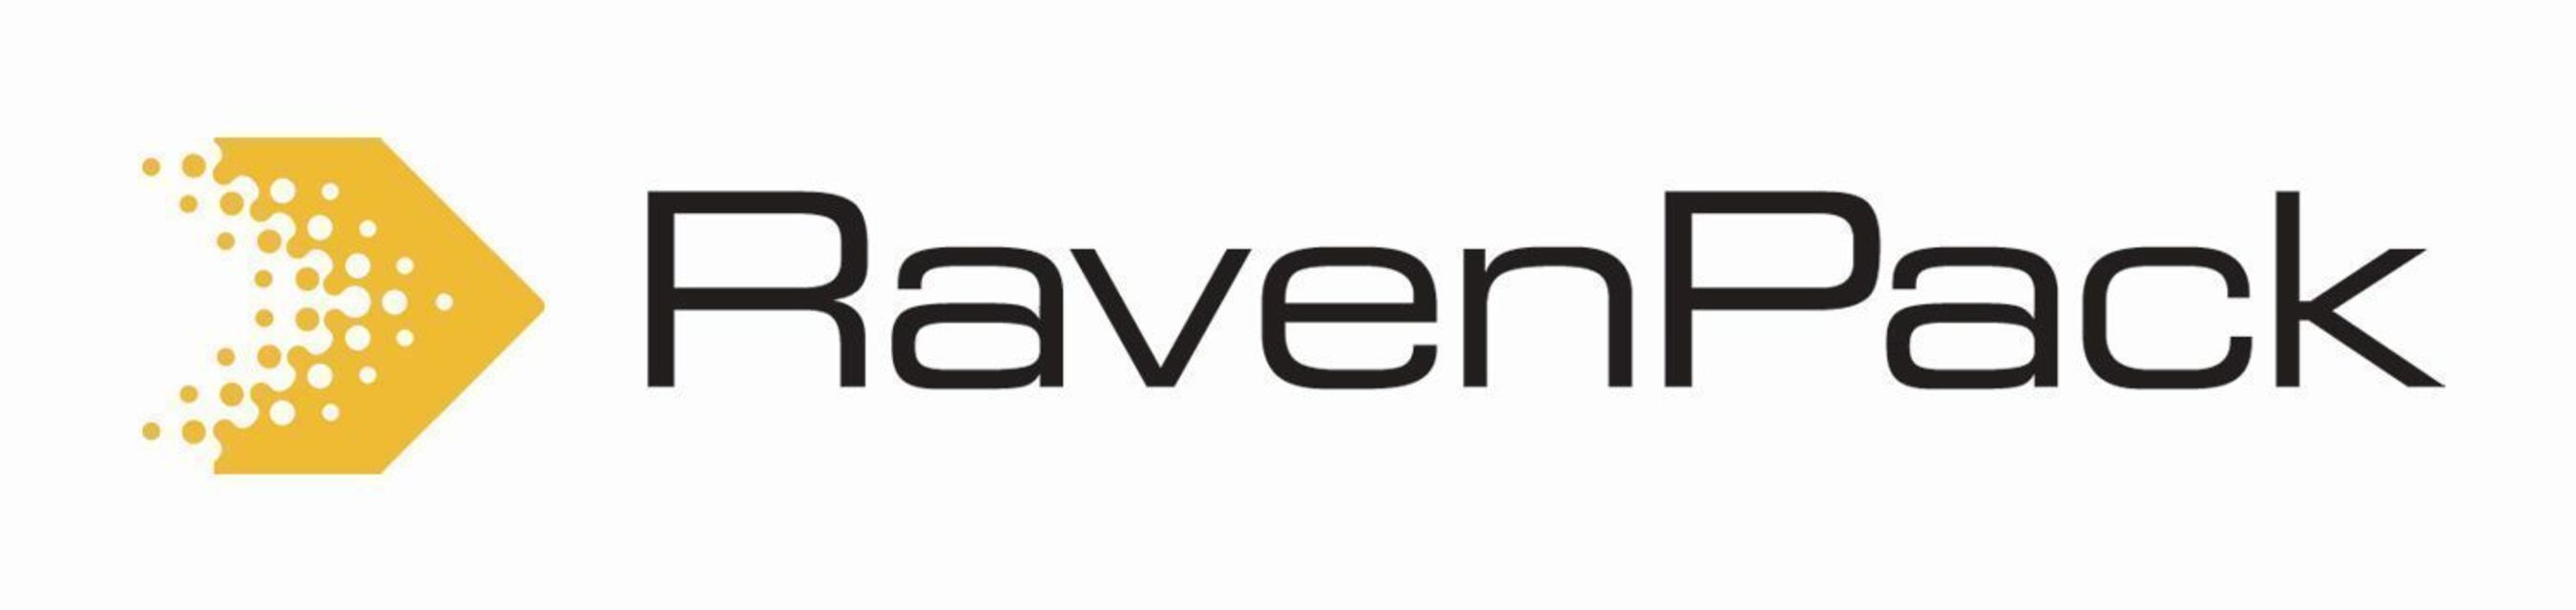 RavenPack Logo (PRNewsFoto/RavenPack)